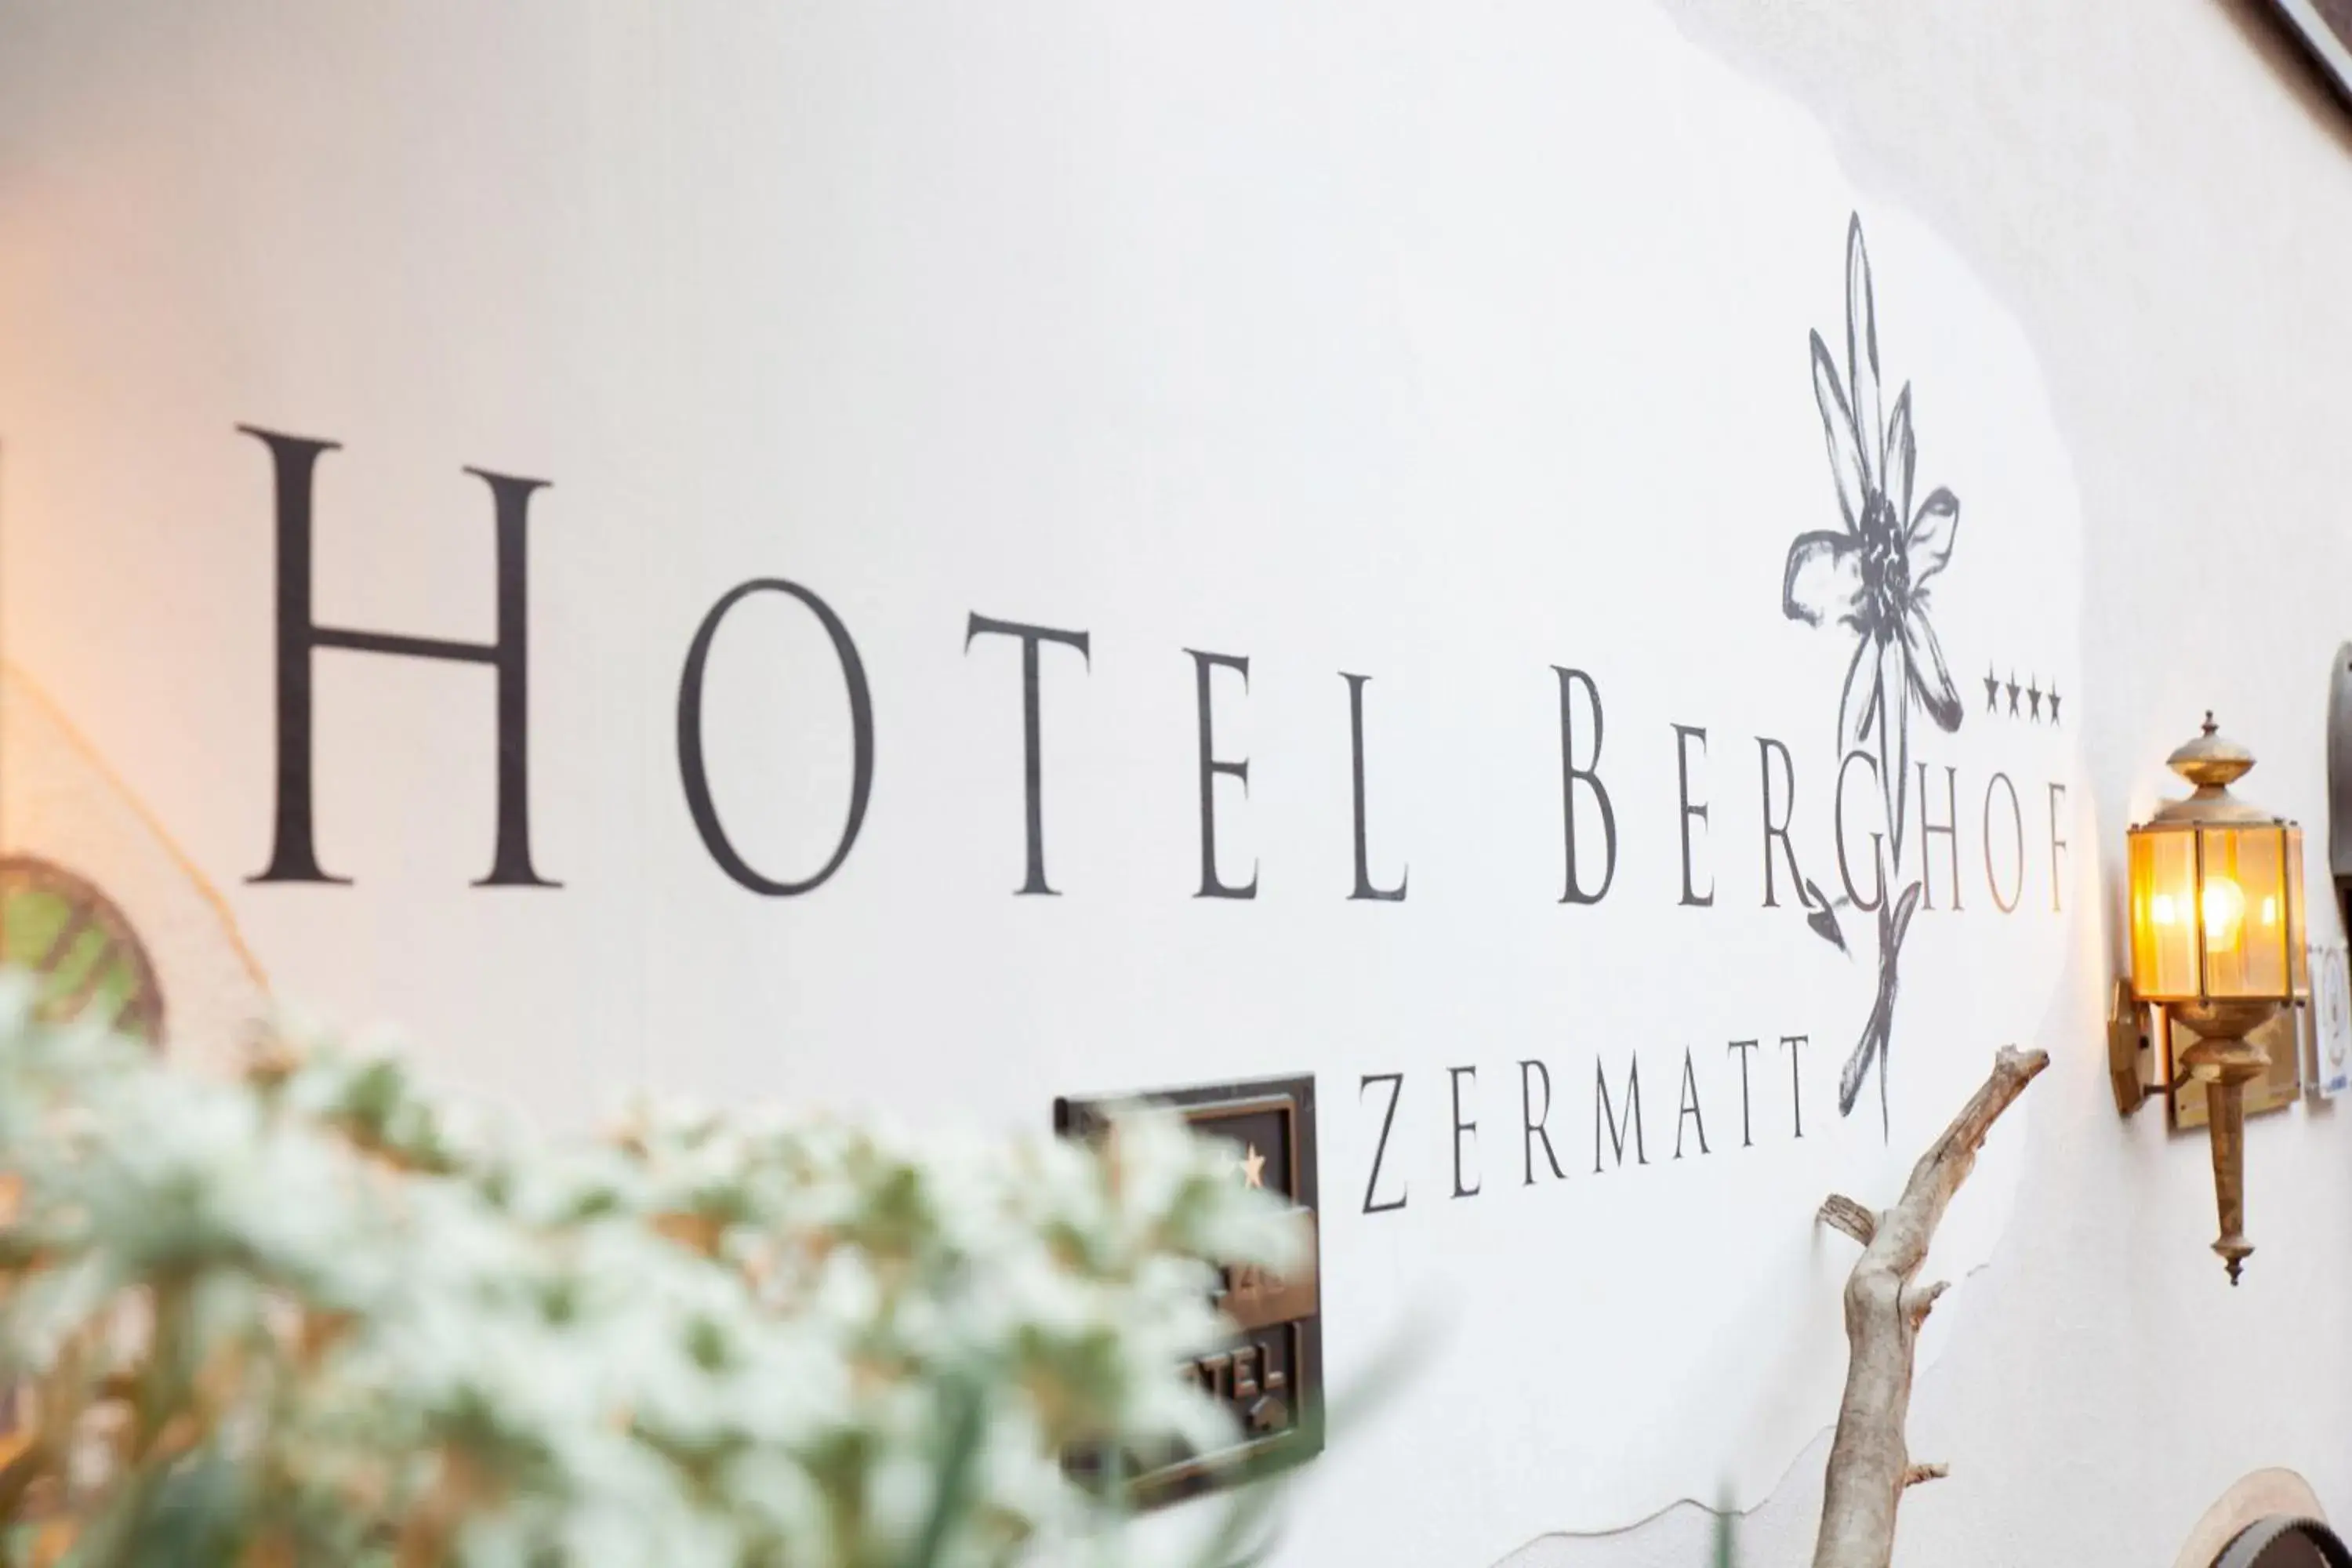 Property logo or sign, Property Logo/Sign in Hotel Berghof